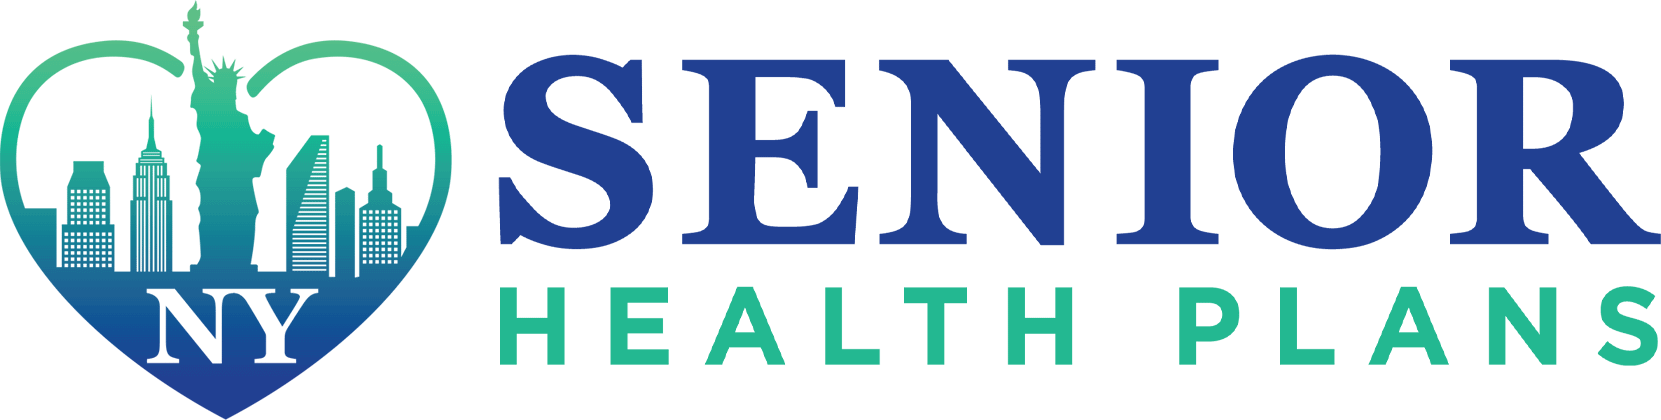 NY Senior Health Plans logo updated